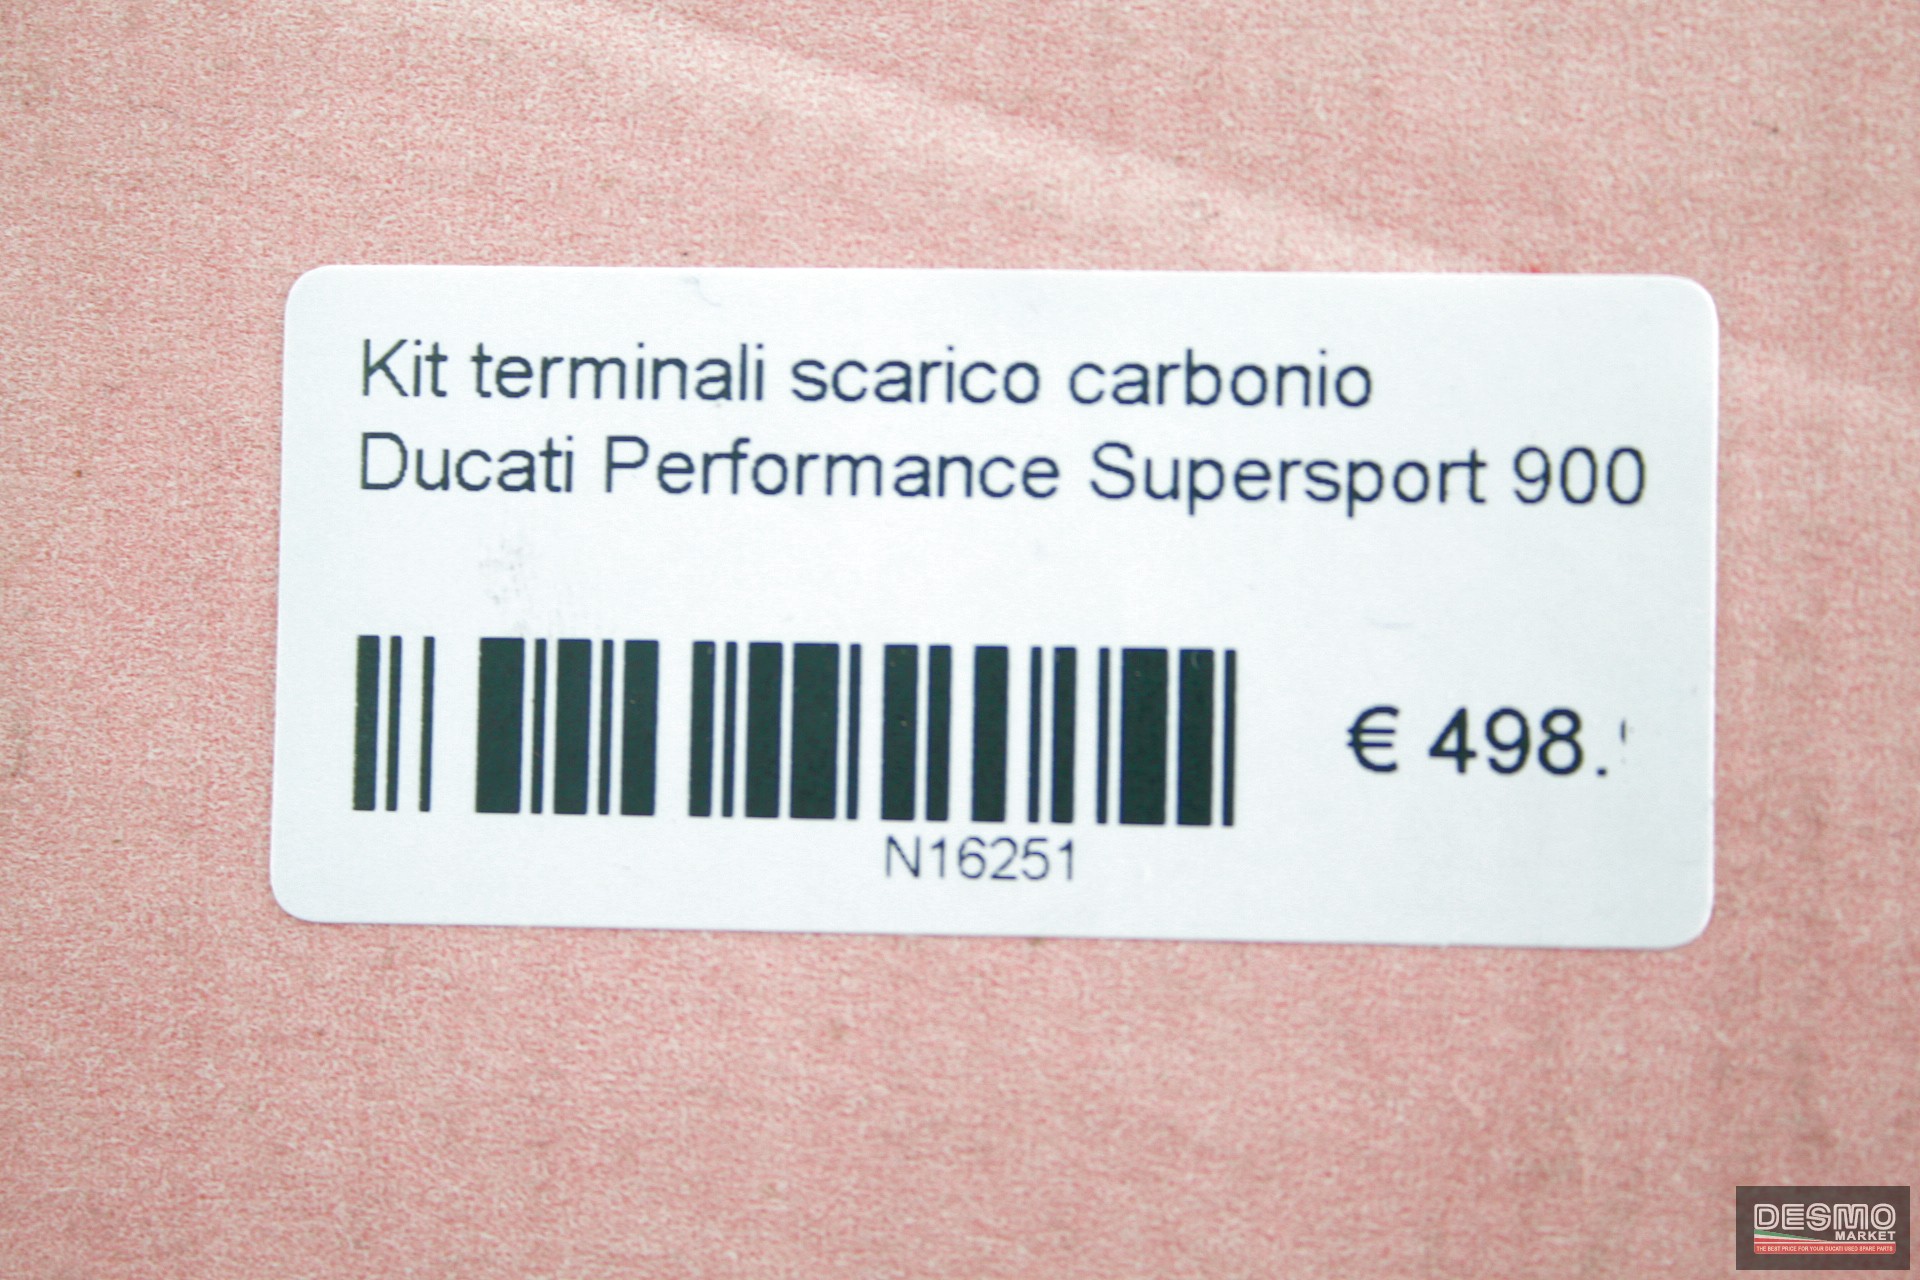 Kit terminali scarico carbonio Ducati Performance Supersport 900